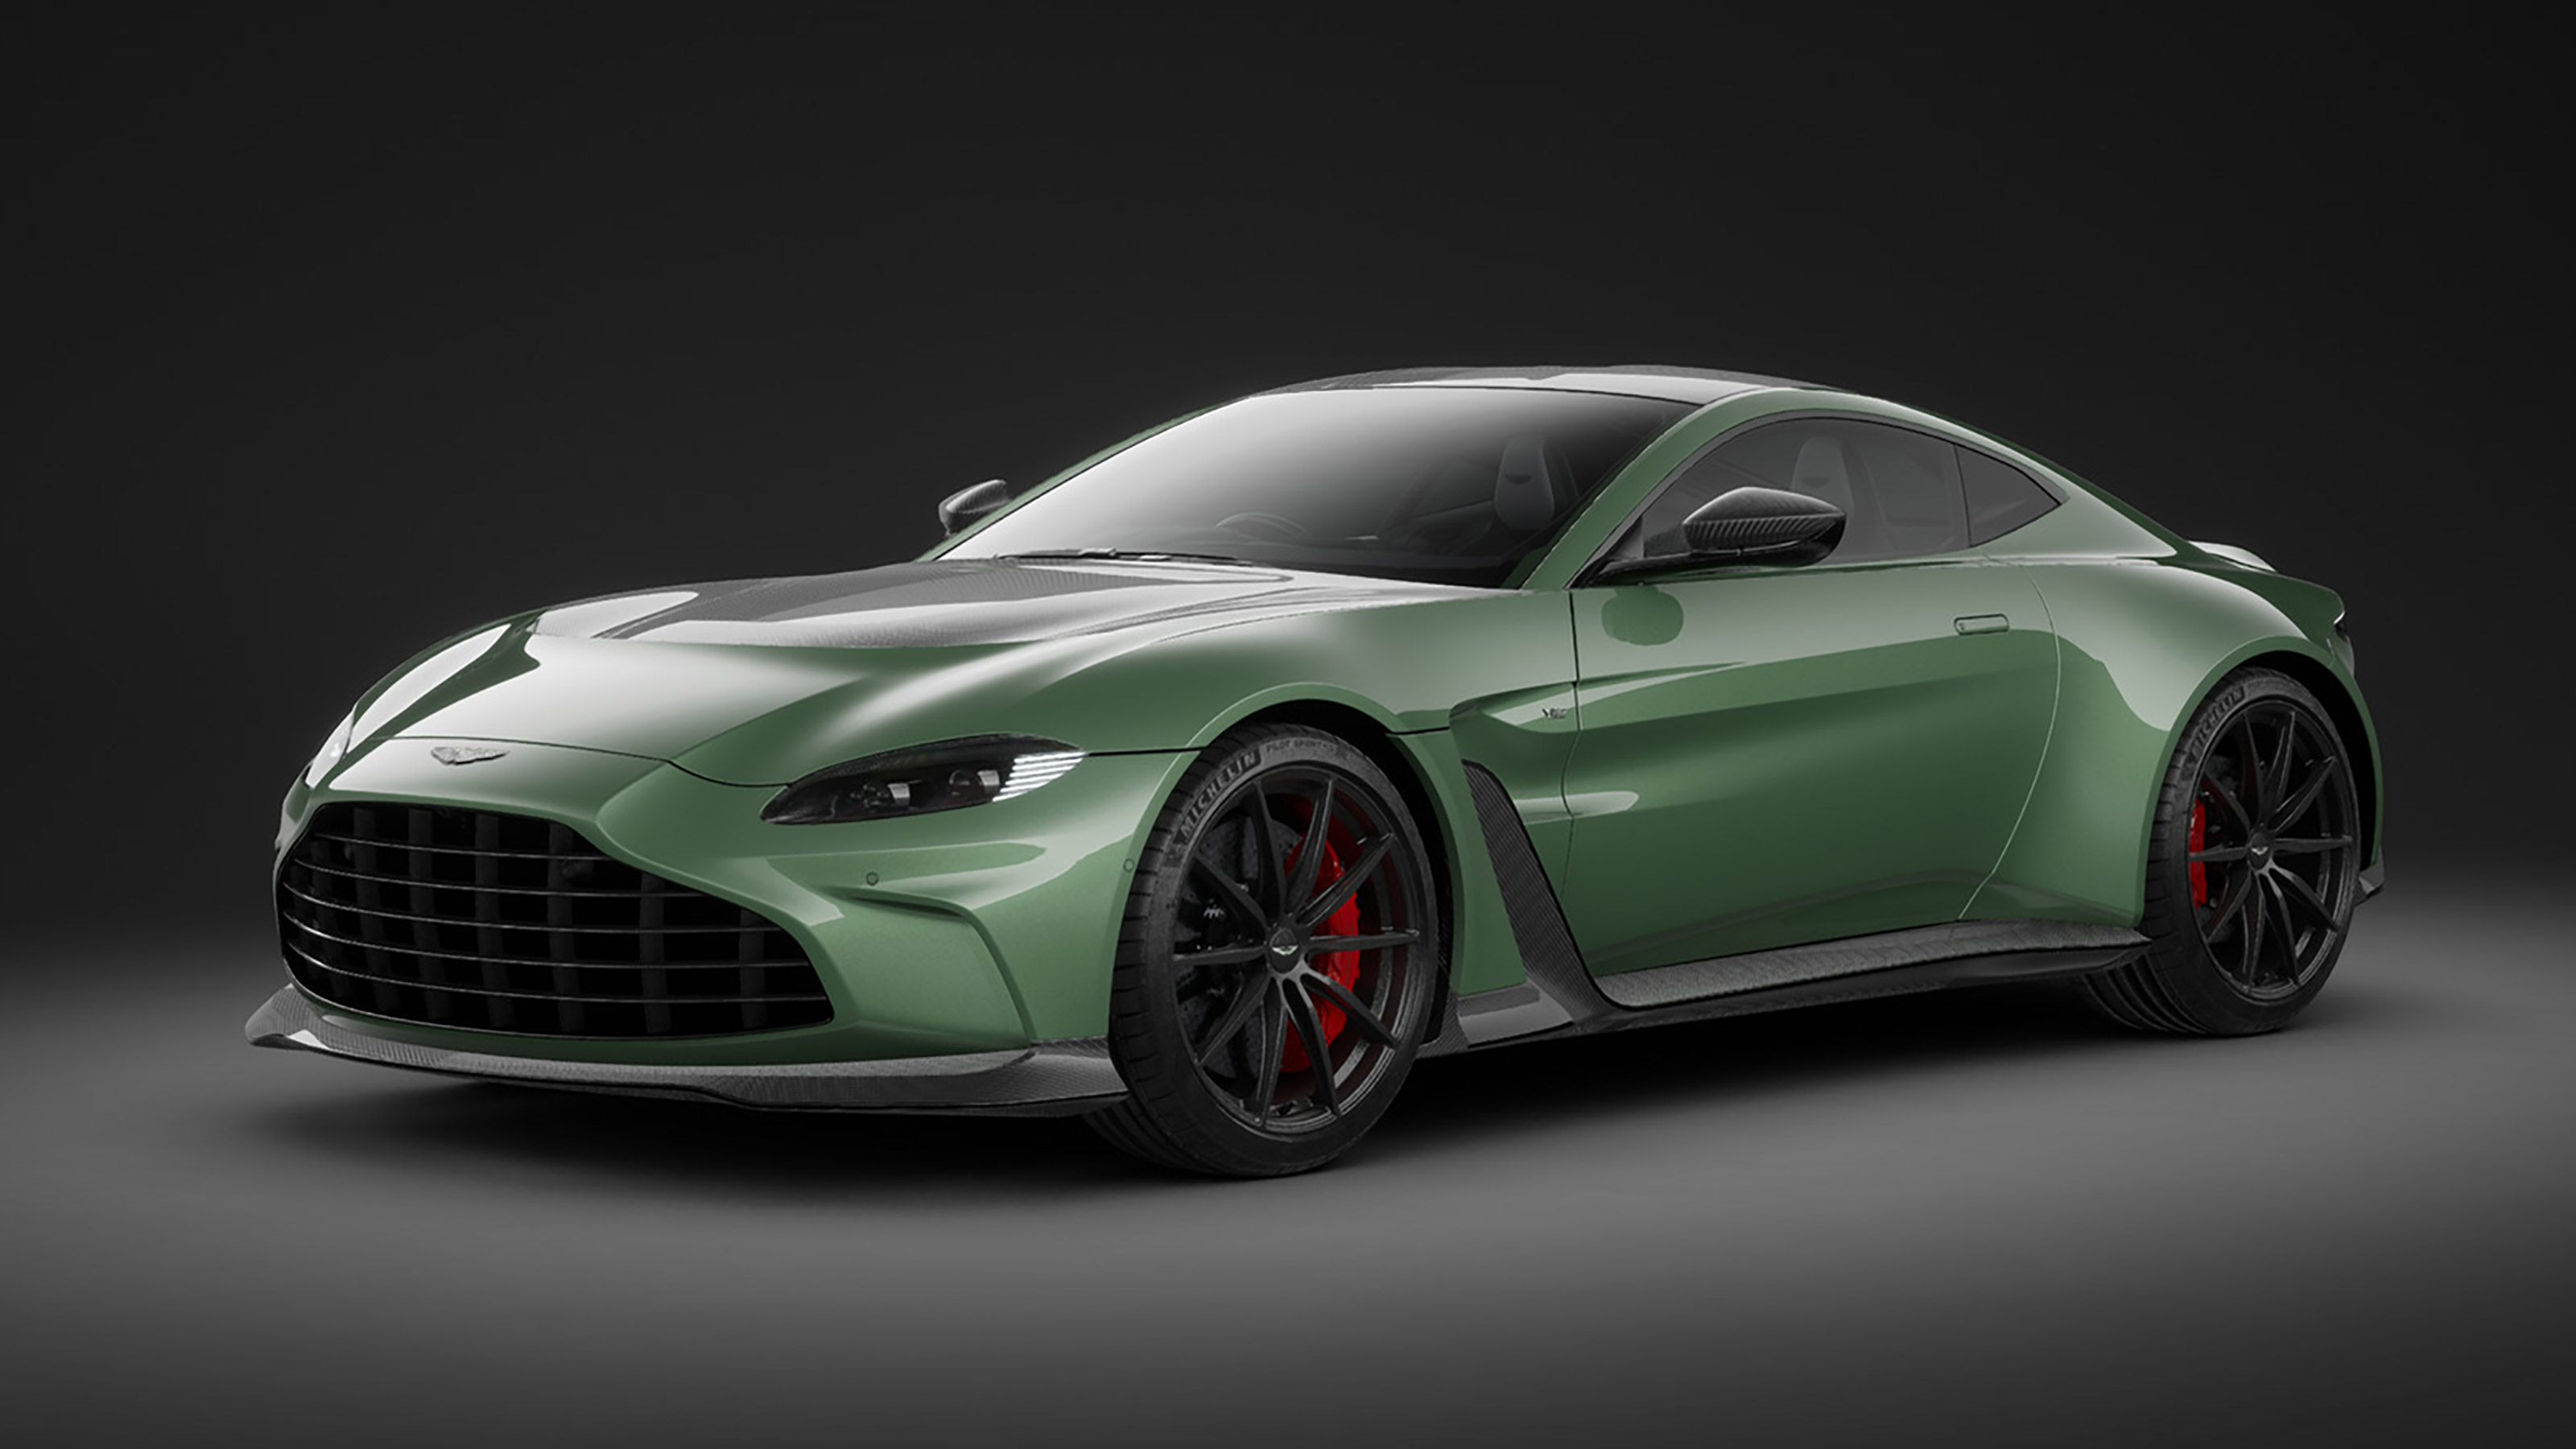 Limited-run Aston Martin V12 Vantage revealed with 690bhp | evo